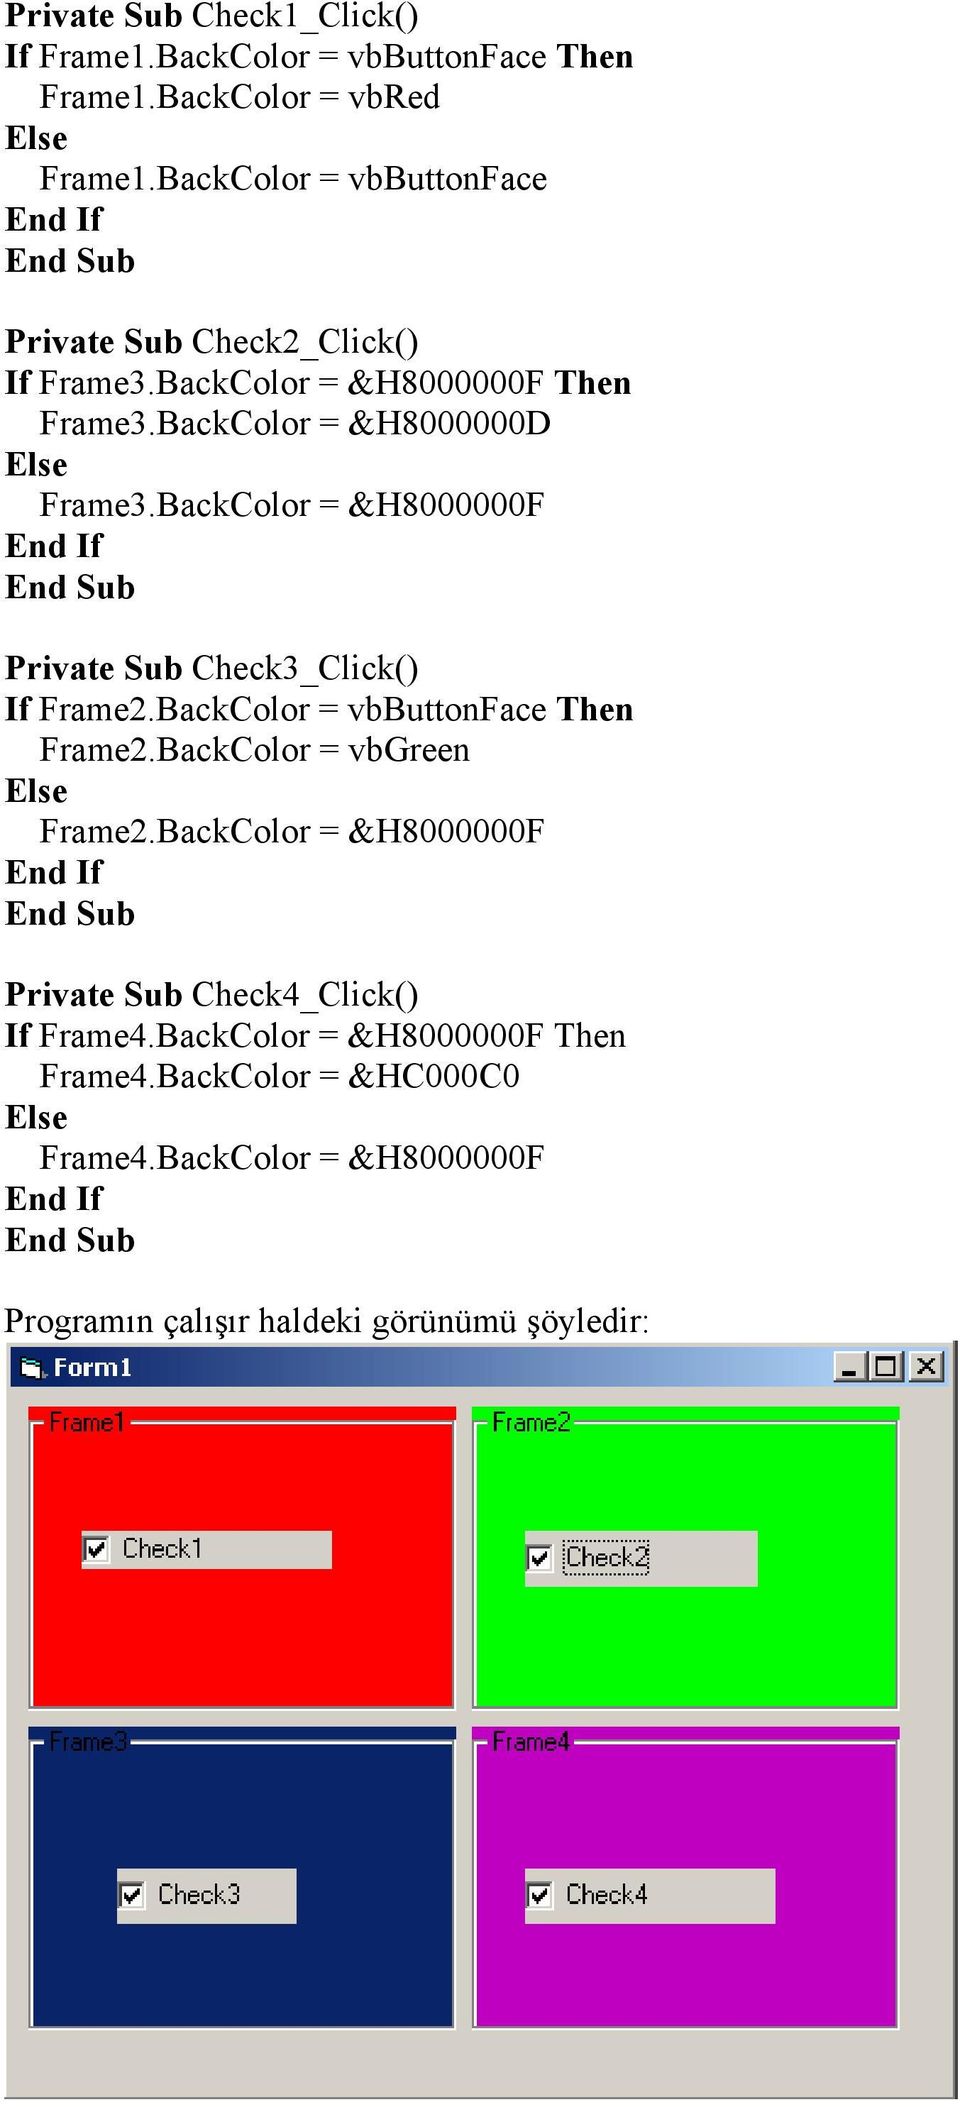 BackColor = &H8000000F End If Private Sub Check3_Click() If Frame2.BackColor = vbbuttonface Then Frame2.BackColor = vbgreen Else Frame2.